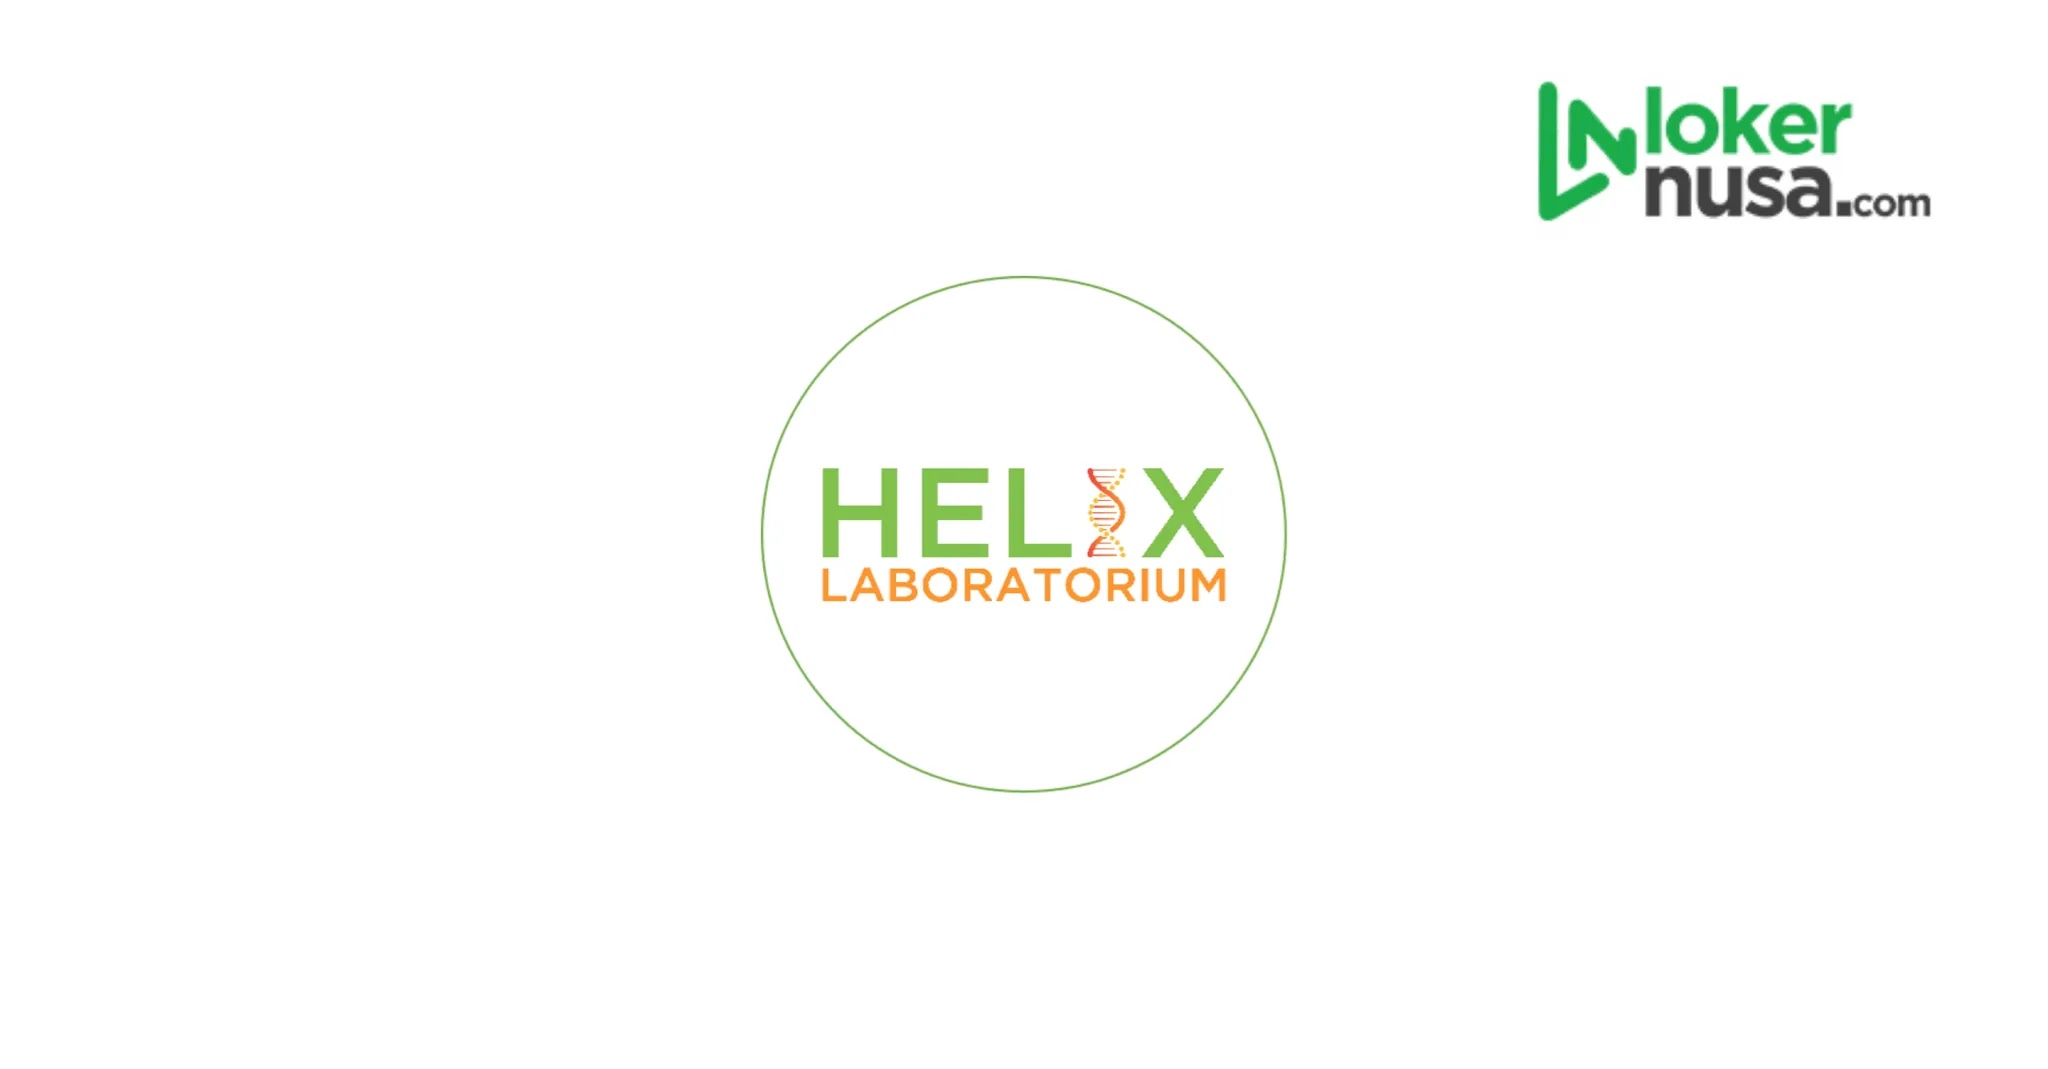 Helix Laboratorium